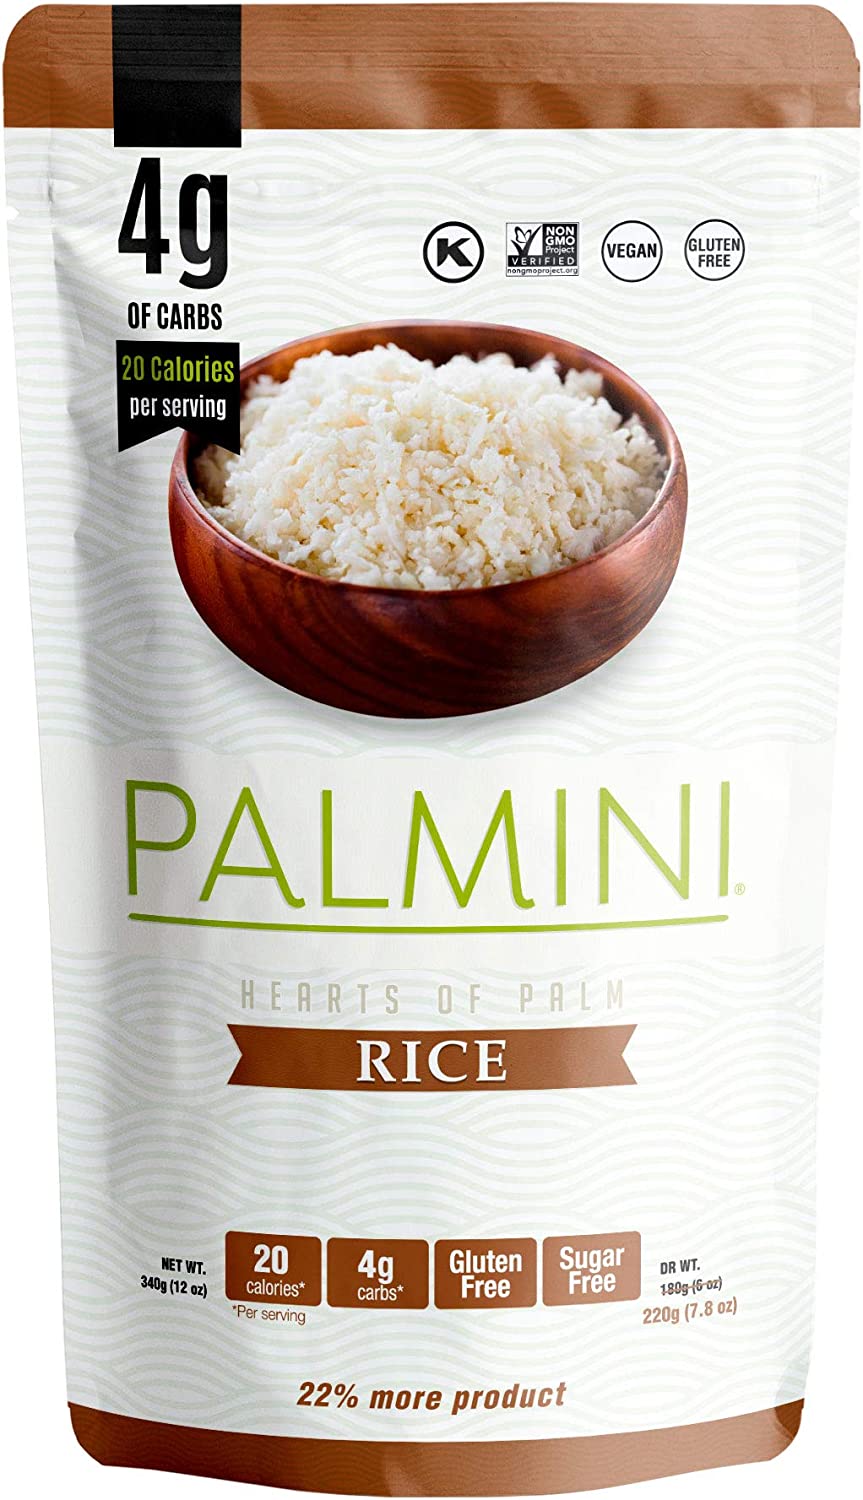 O.A. FOODS PALMINI Gluten Free Rice, 340g